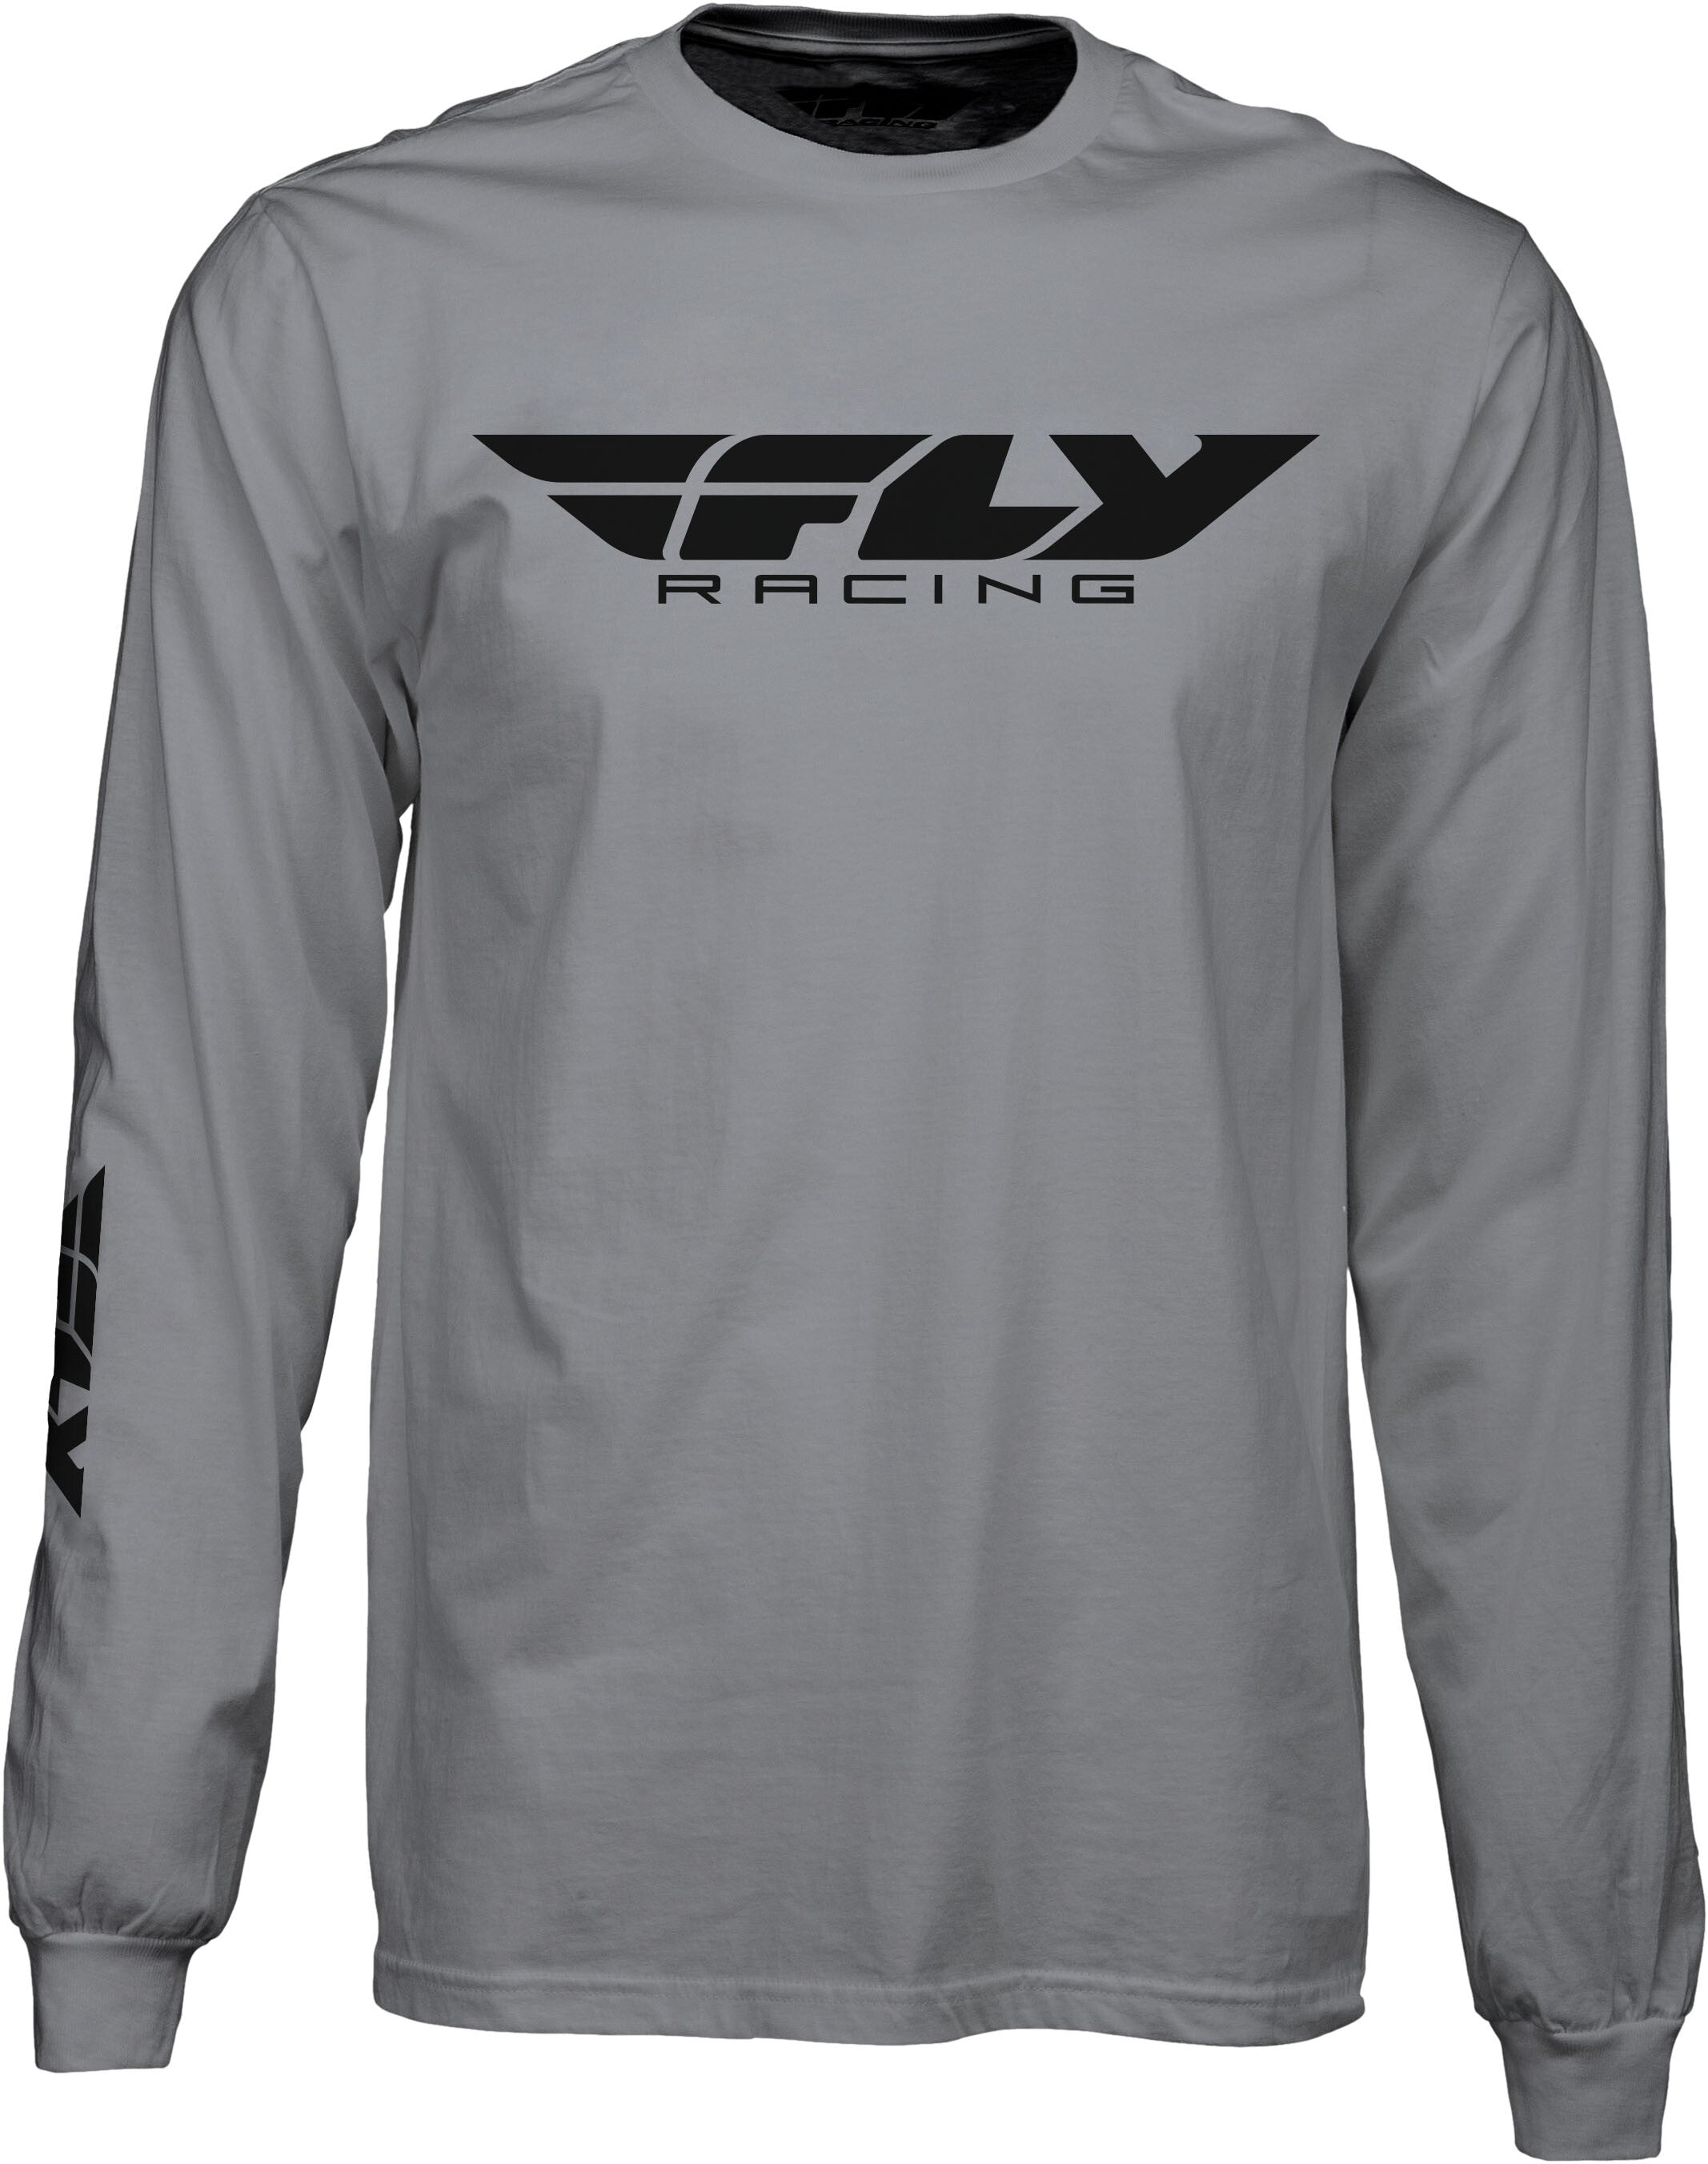 Fly Racing Corporate Long Sleeve Tee Grey 2X-Large 352-41462X